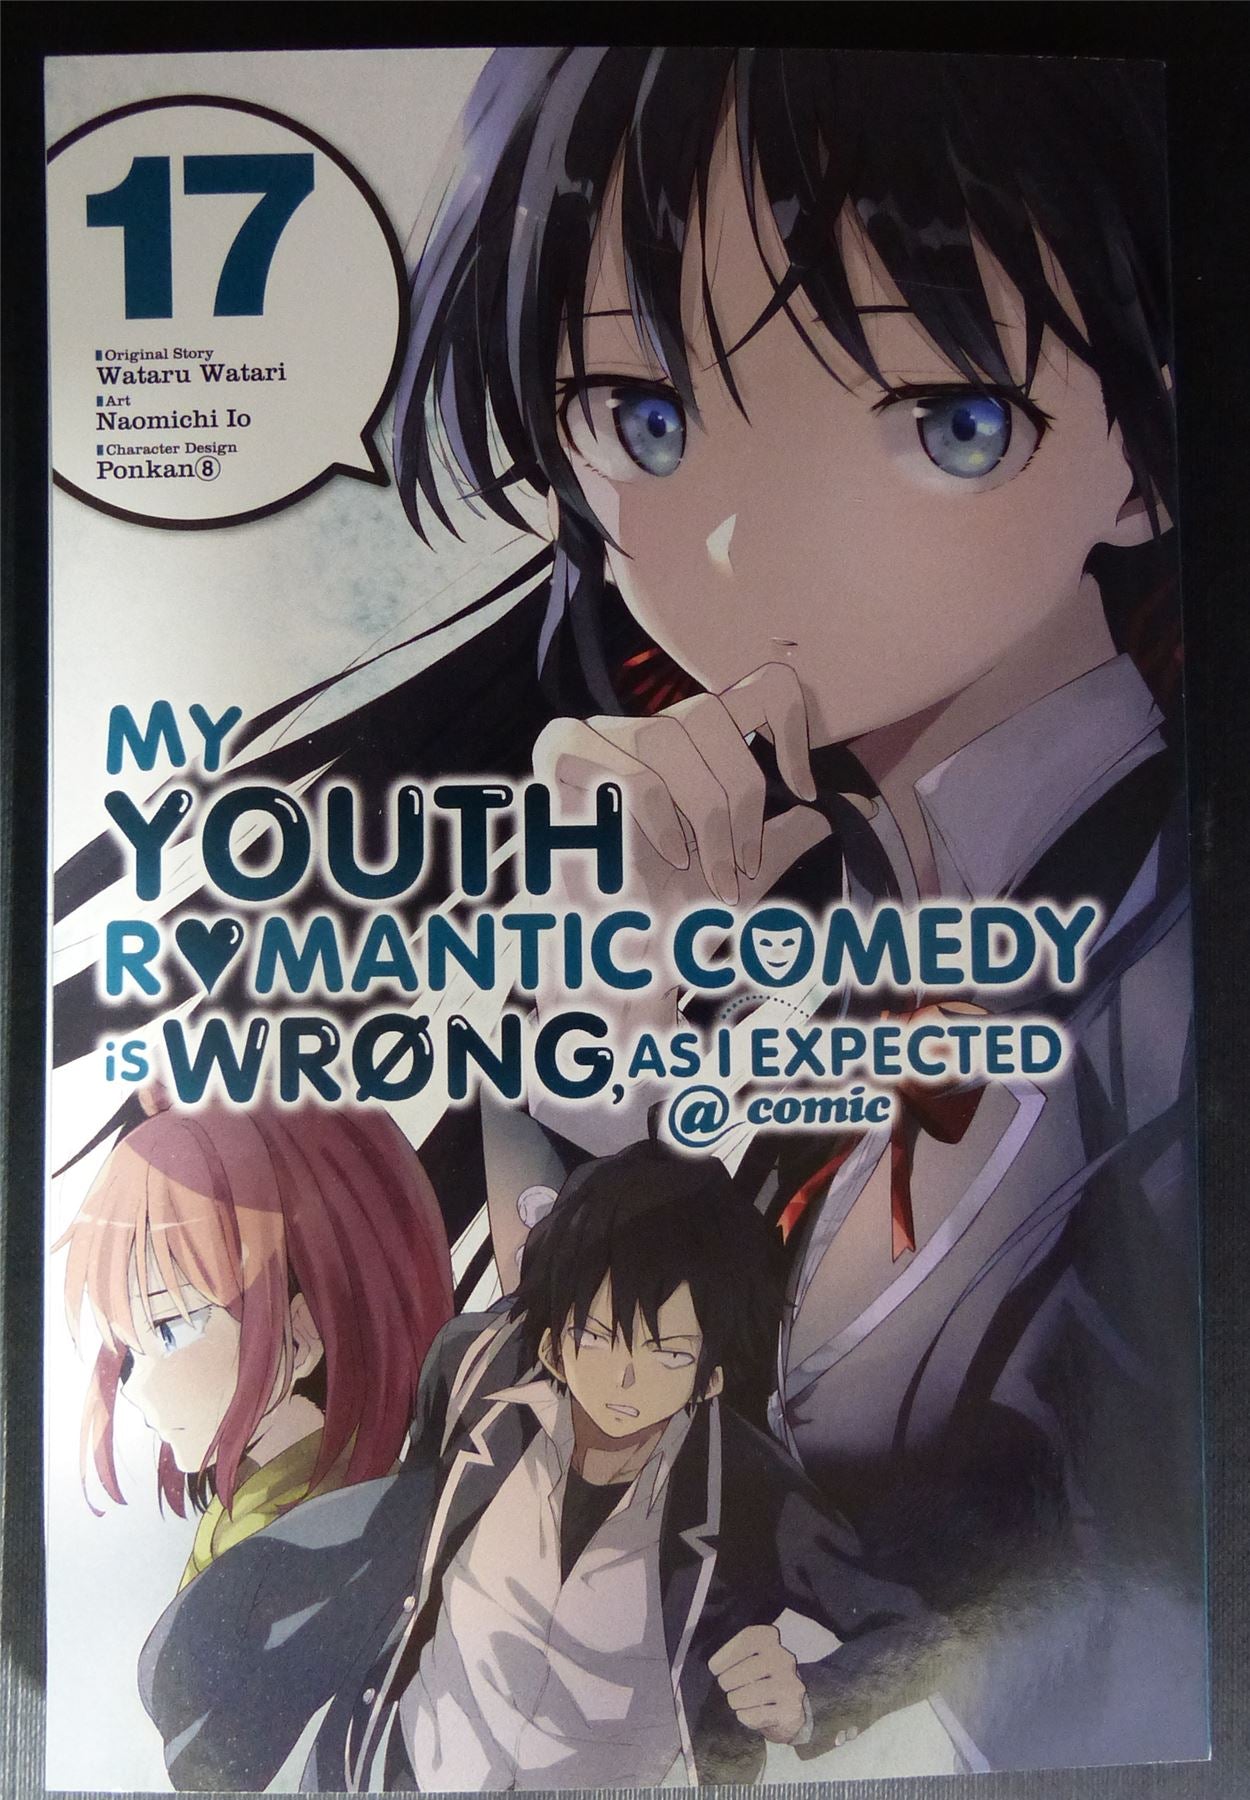 My YOUTH Romantic Comedy volume 17 - Feb 2022 - Yen Press Manga #6R3